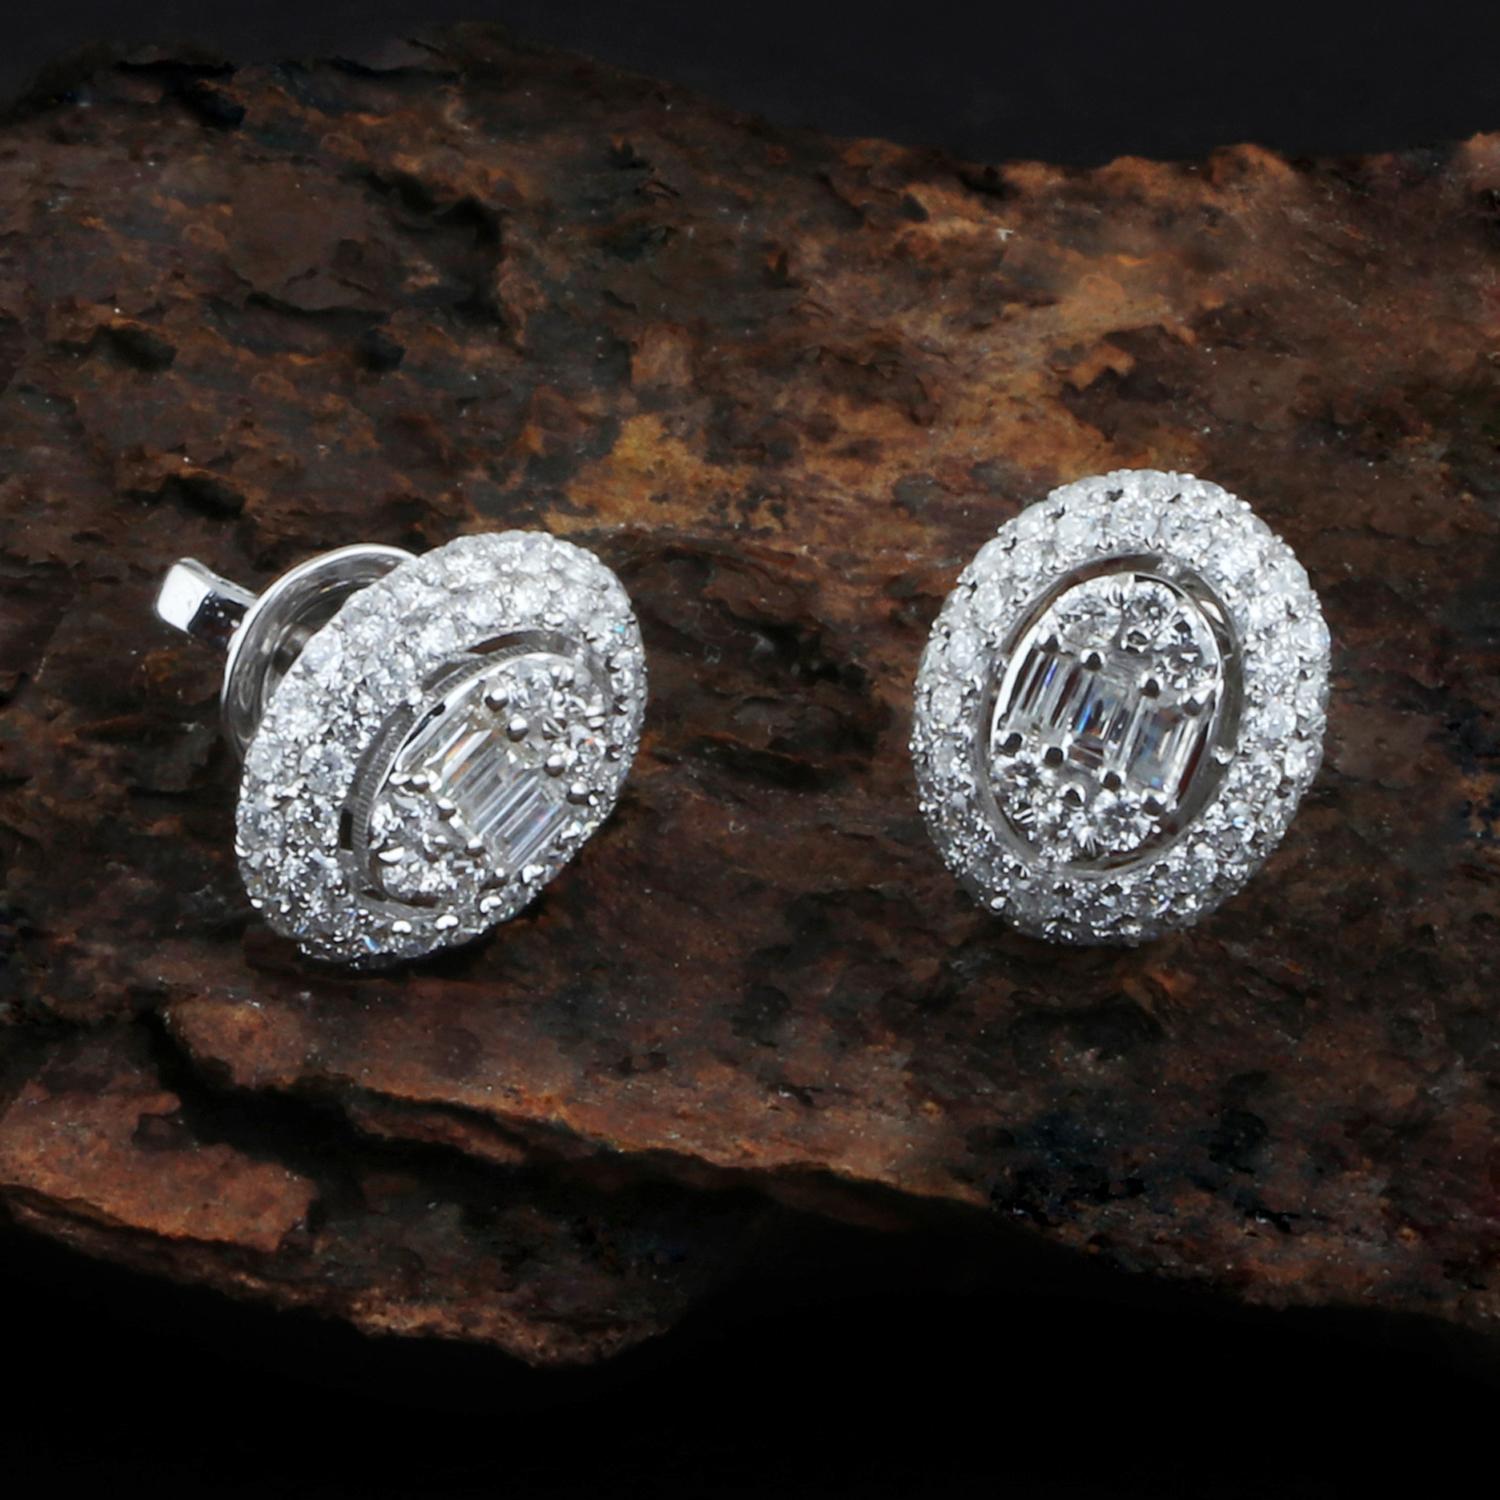 1.3 carat diamond earrings